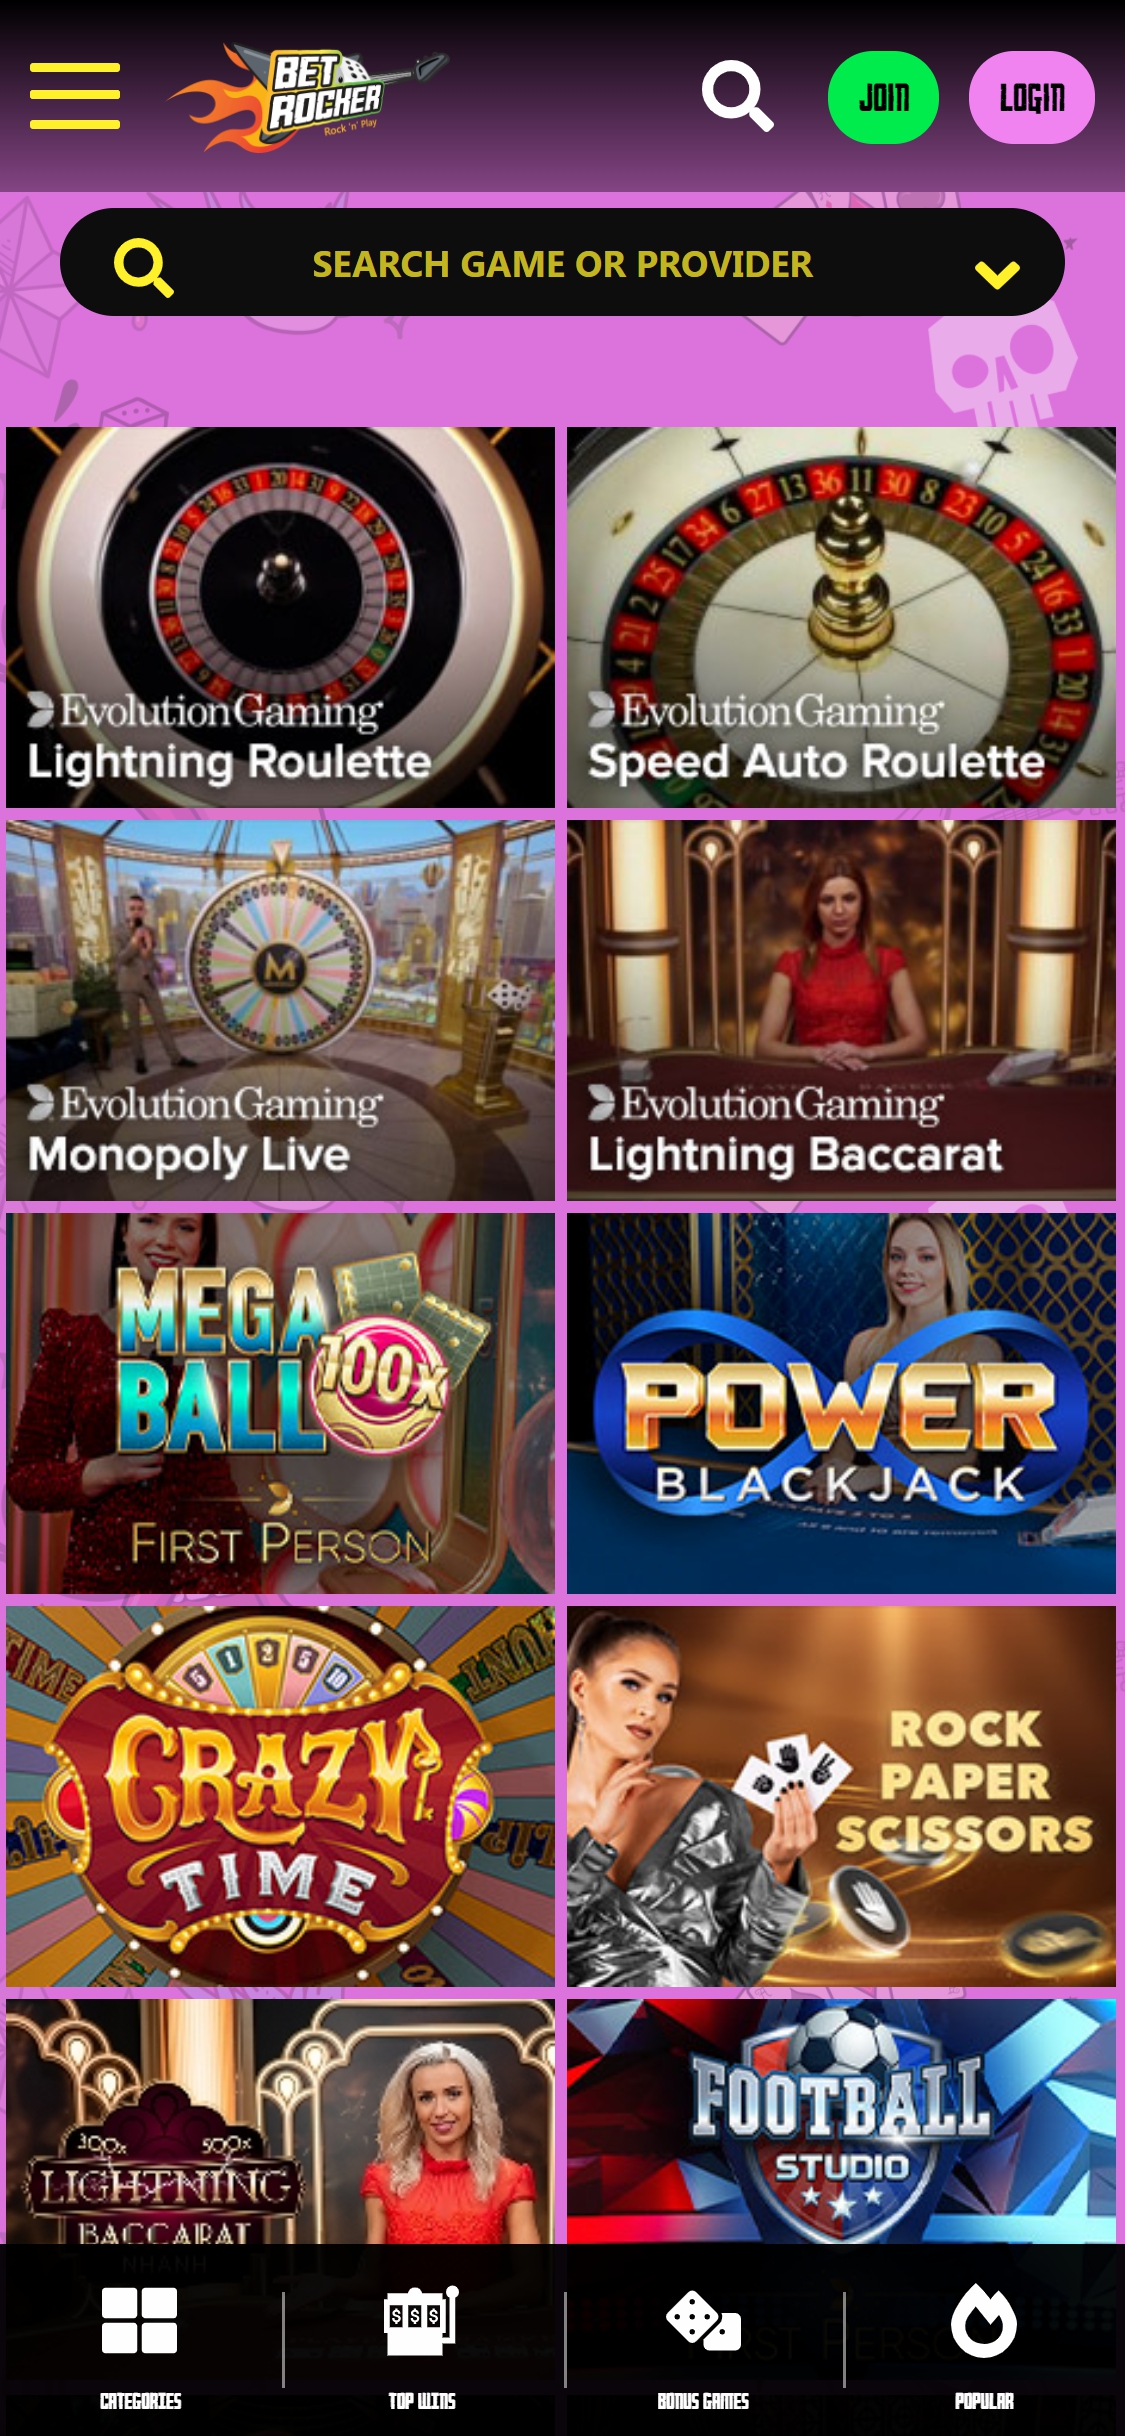 Betrocker Casino Mobile Live Dealer Games Review